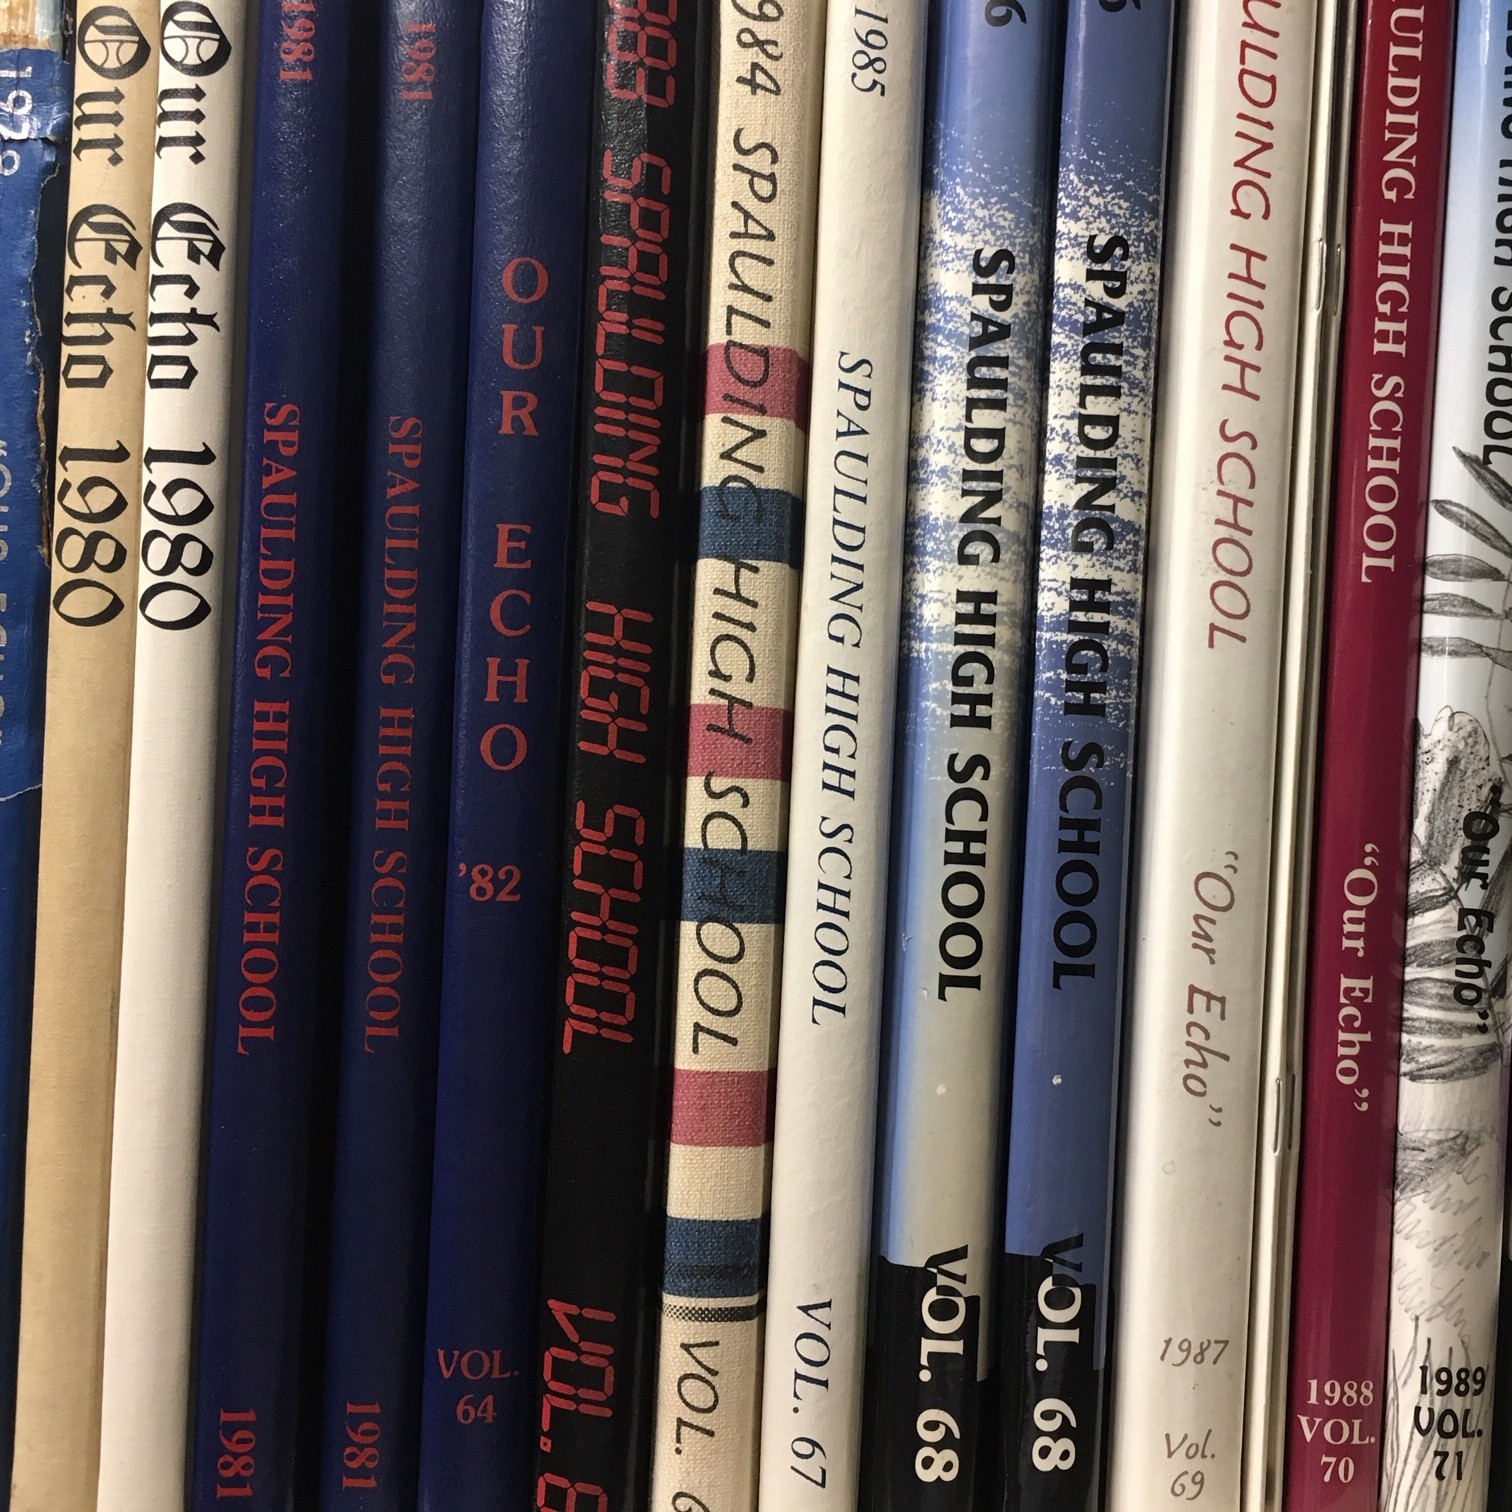 Photo of spines of Spaulding High School yearbooks.